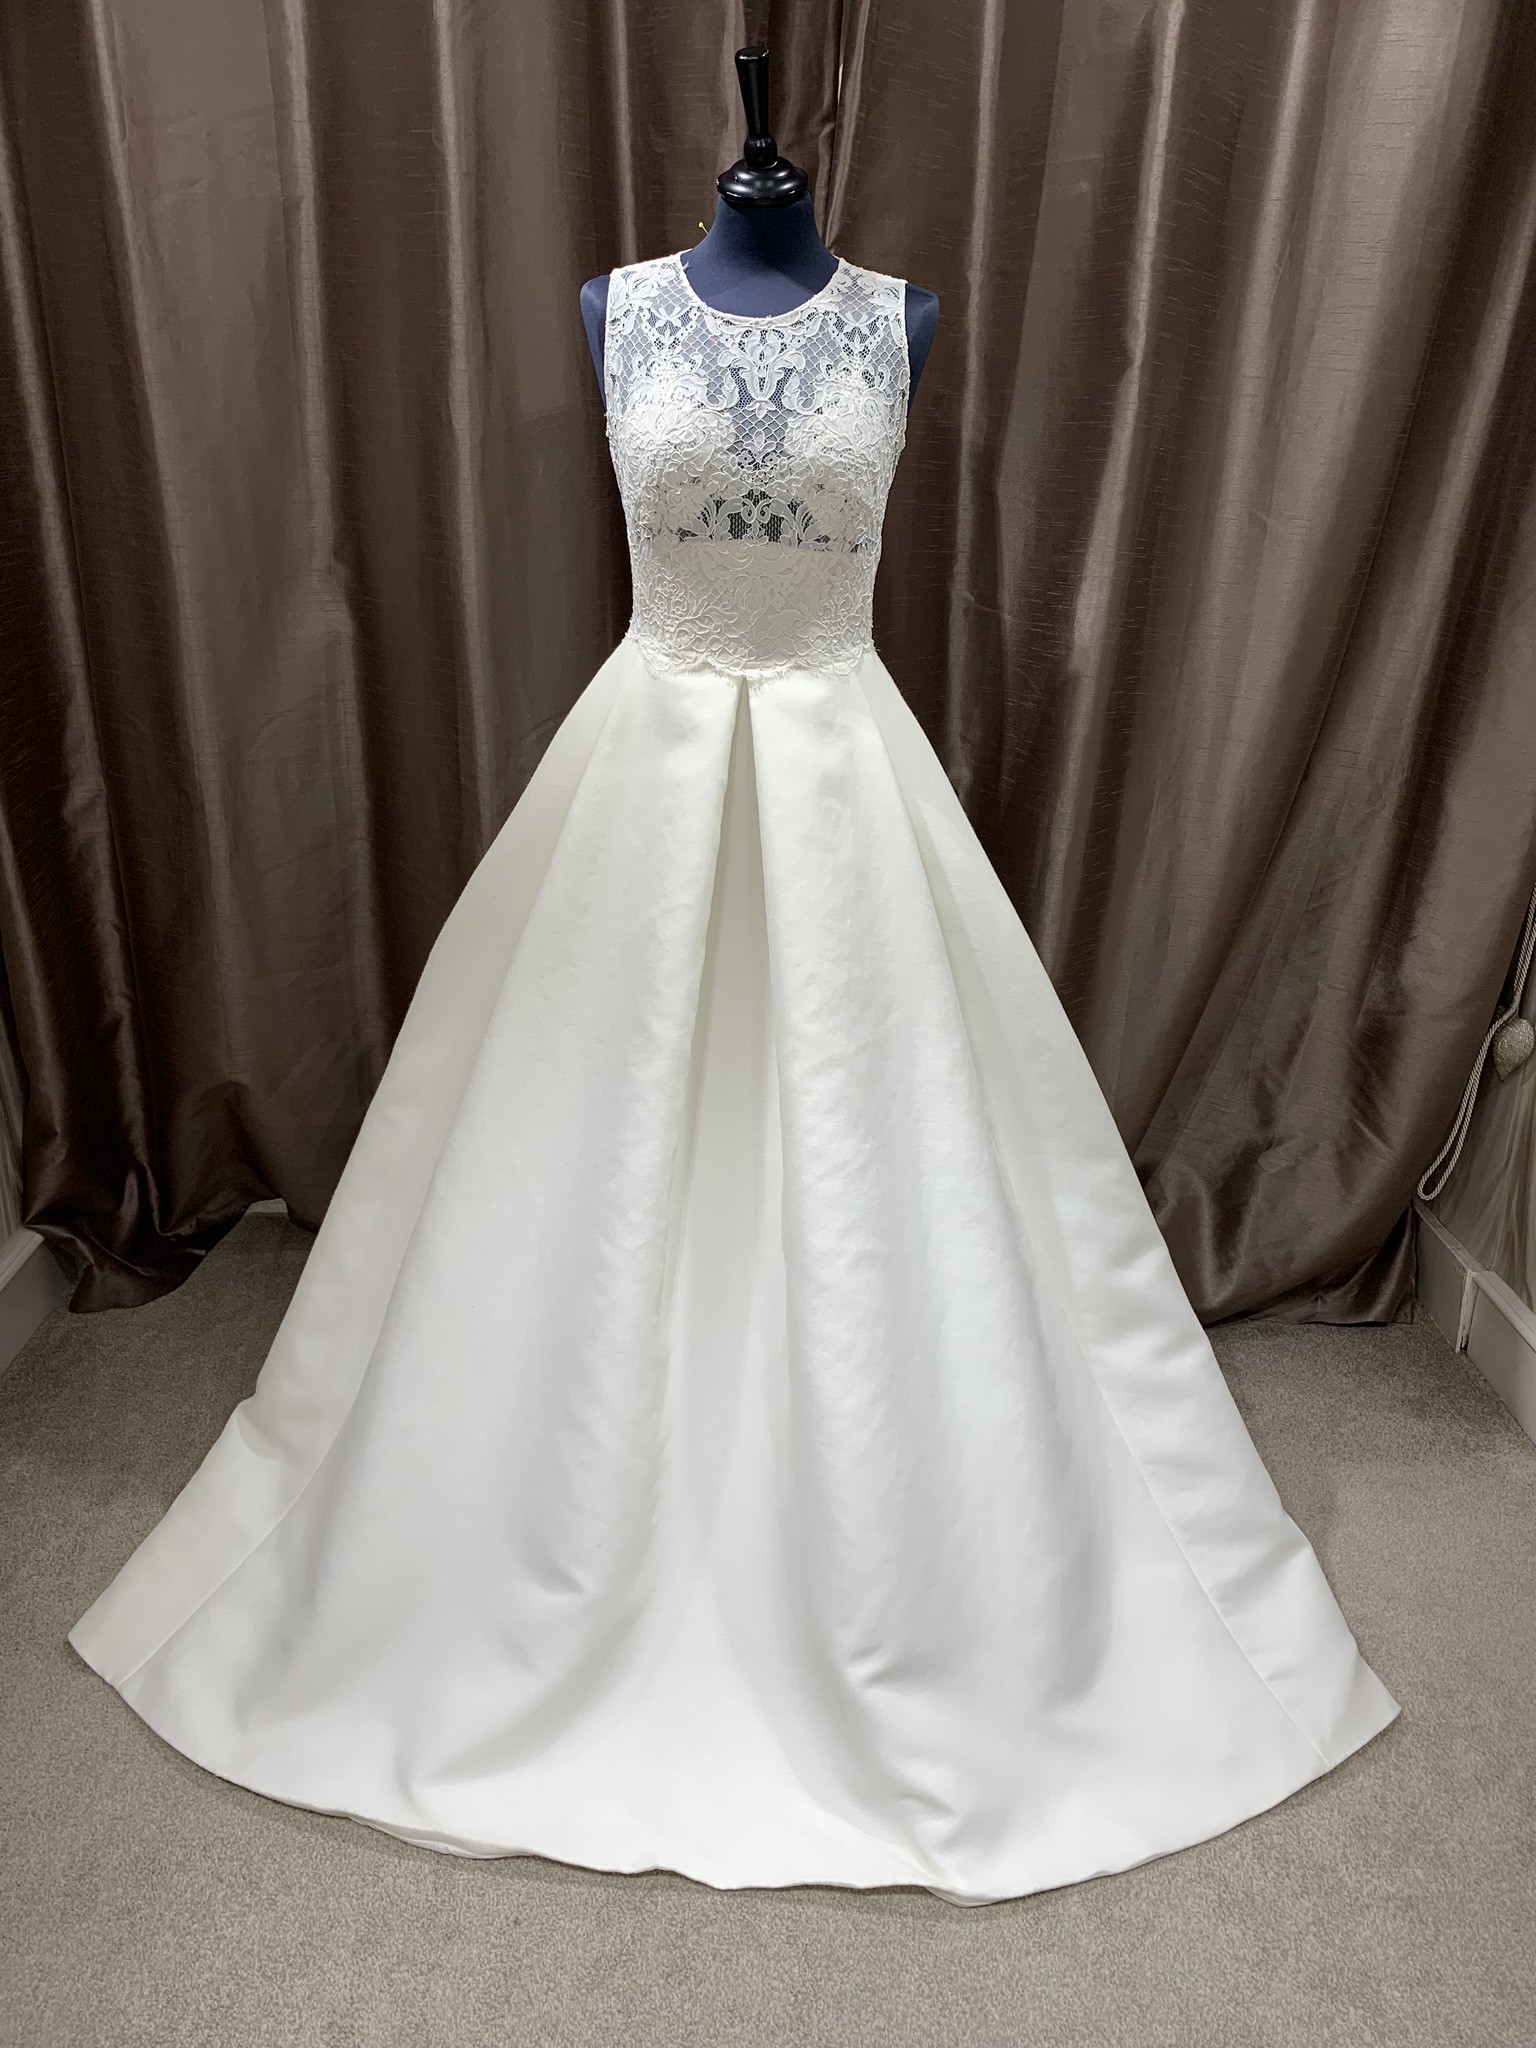  Jesus  Peiro  7008 Sample Wedding  Dress  on Sale 72 Off 